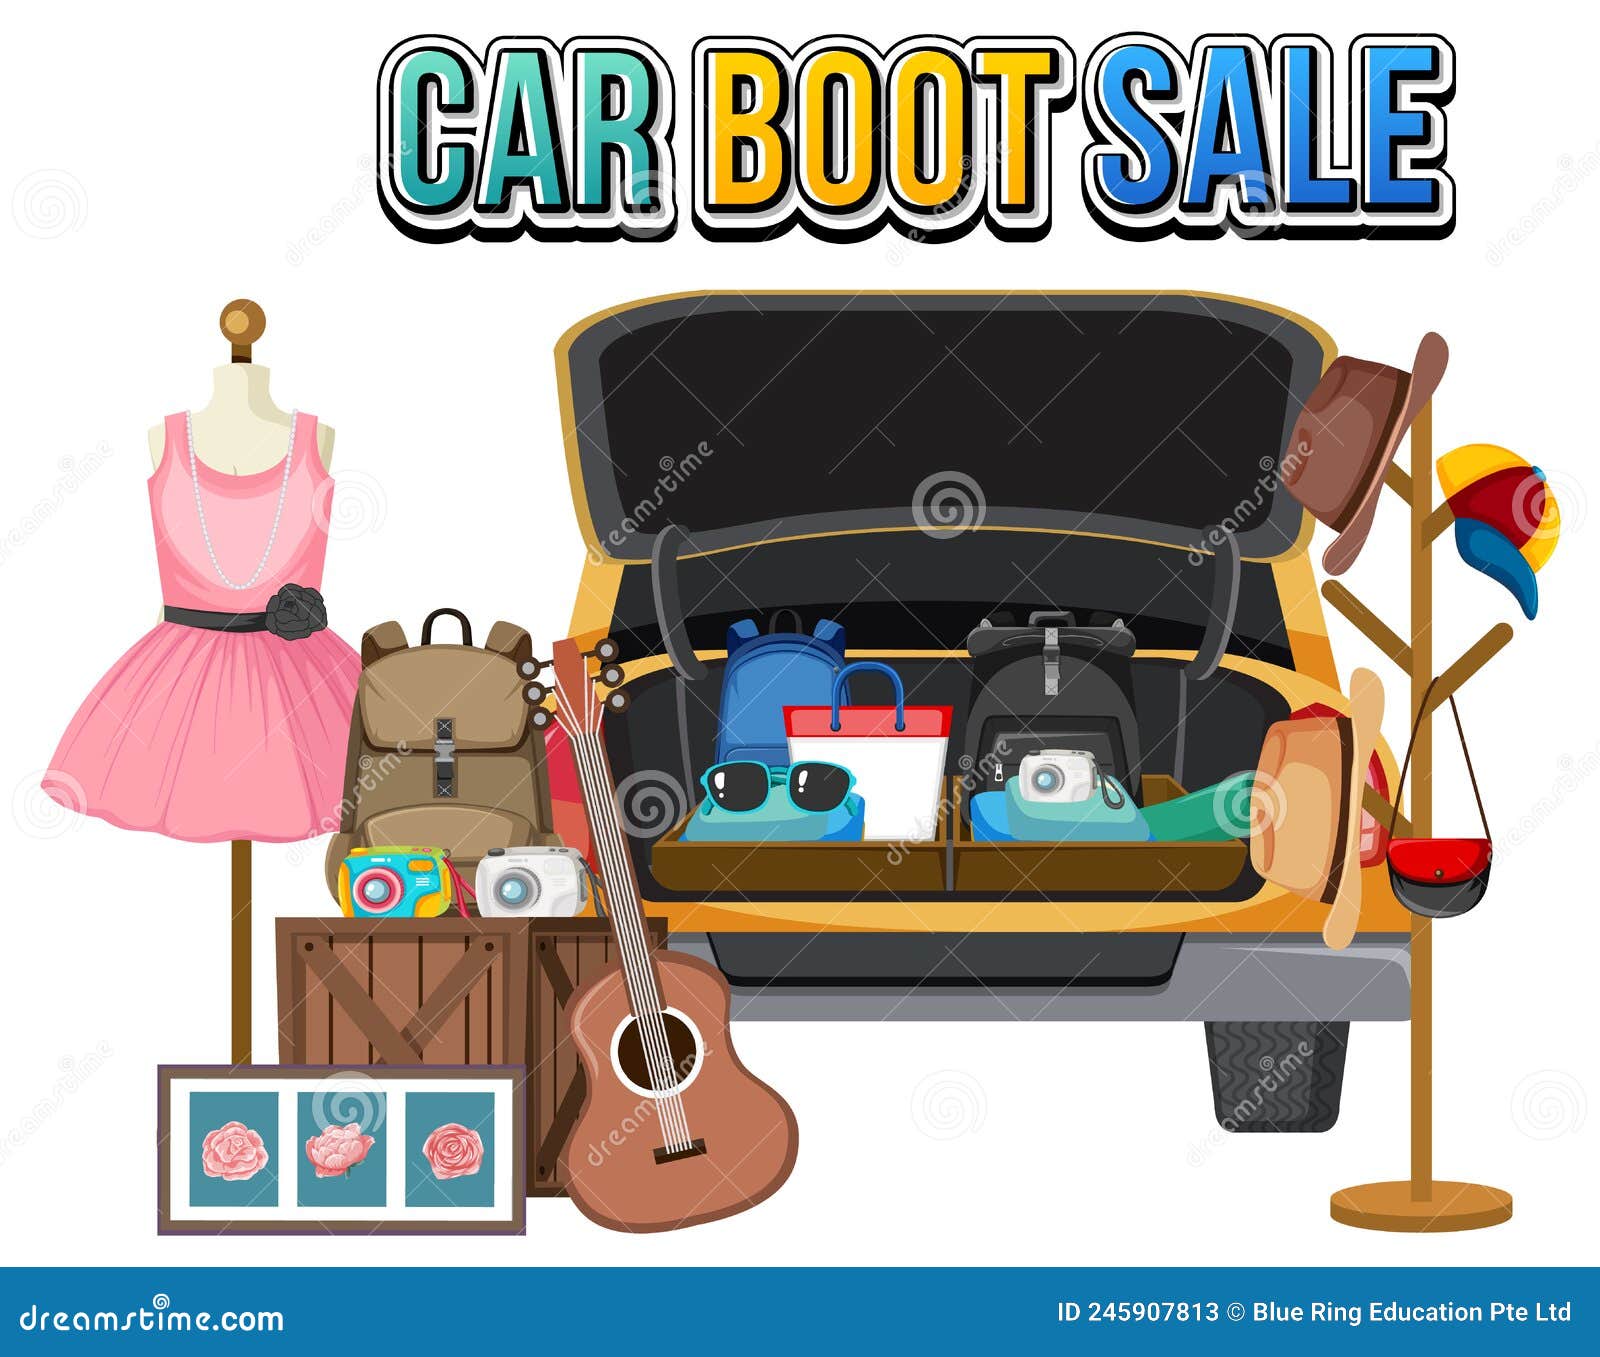 flea market concept with car boot sale